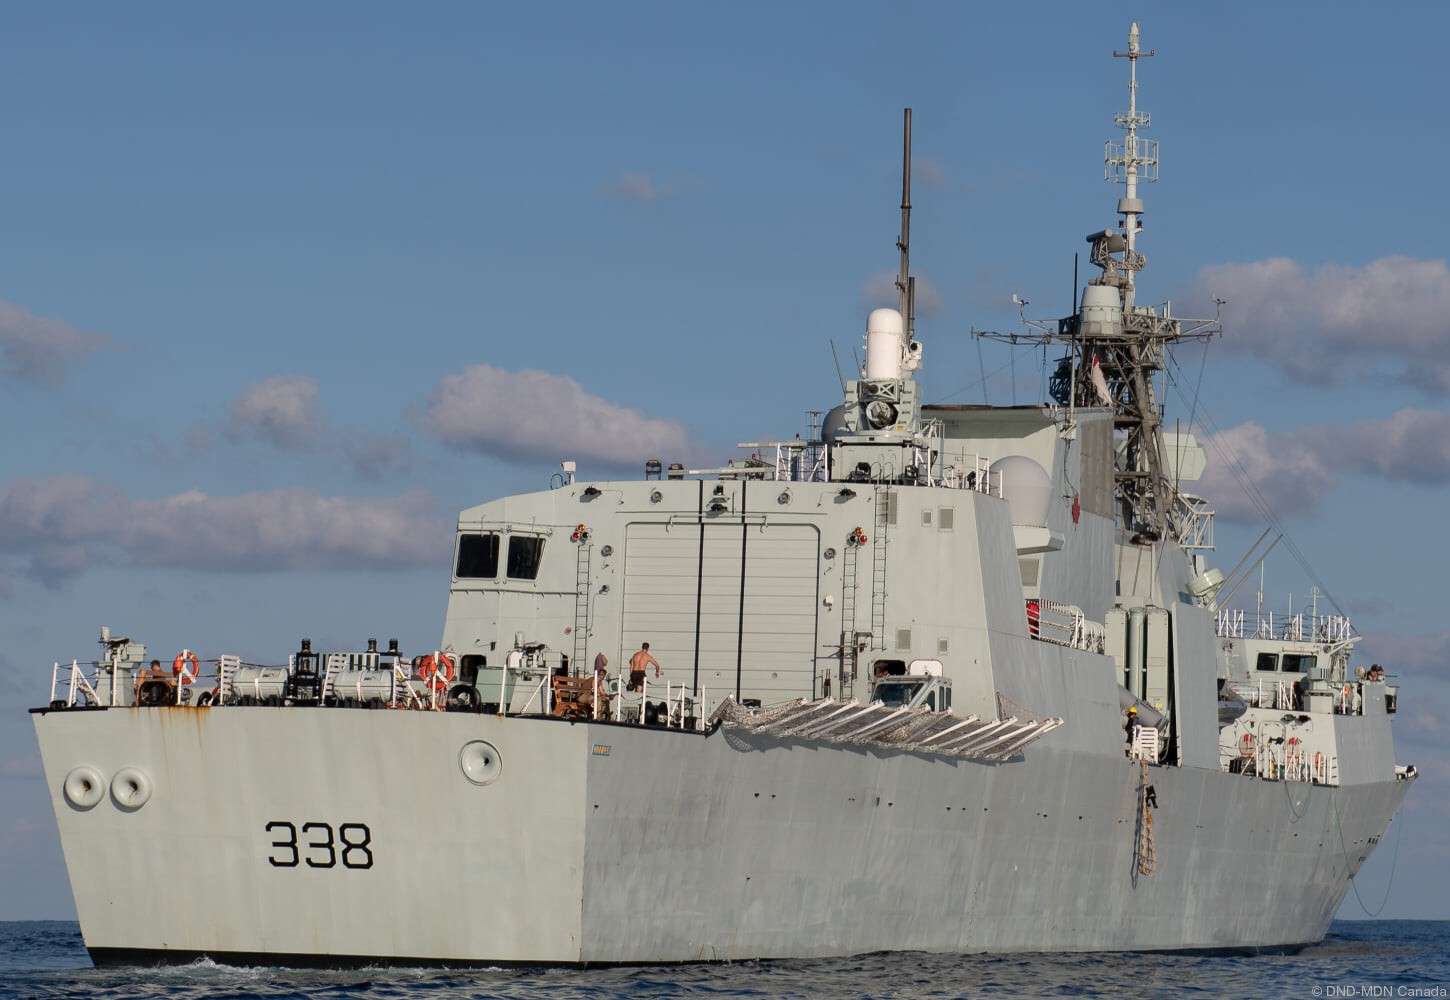 ffh-338 hmcs winnipeg halifax class helicopter patrol frigate ncsm royal canadian navy 45